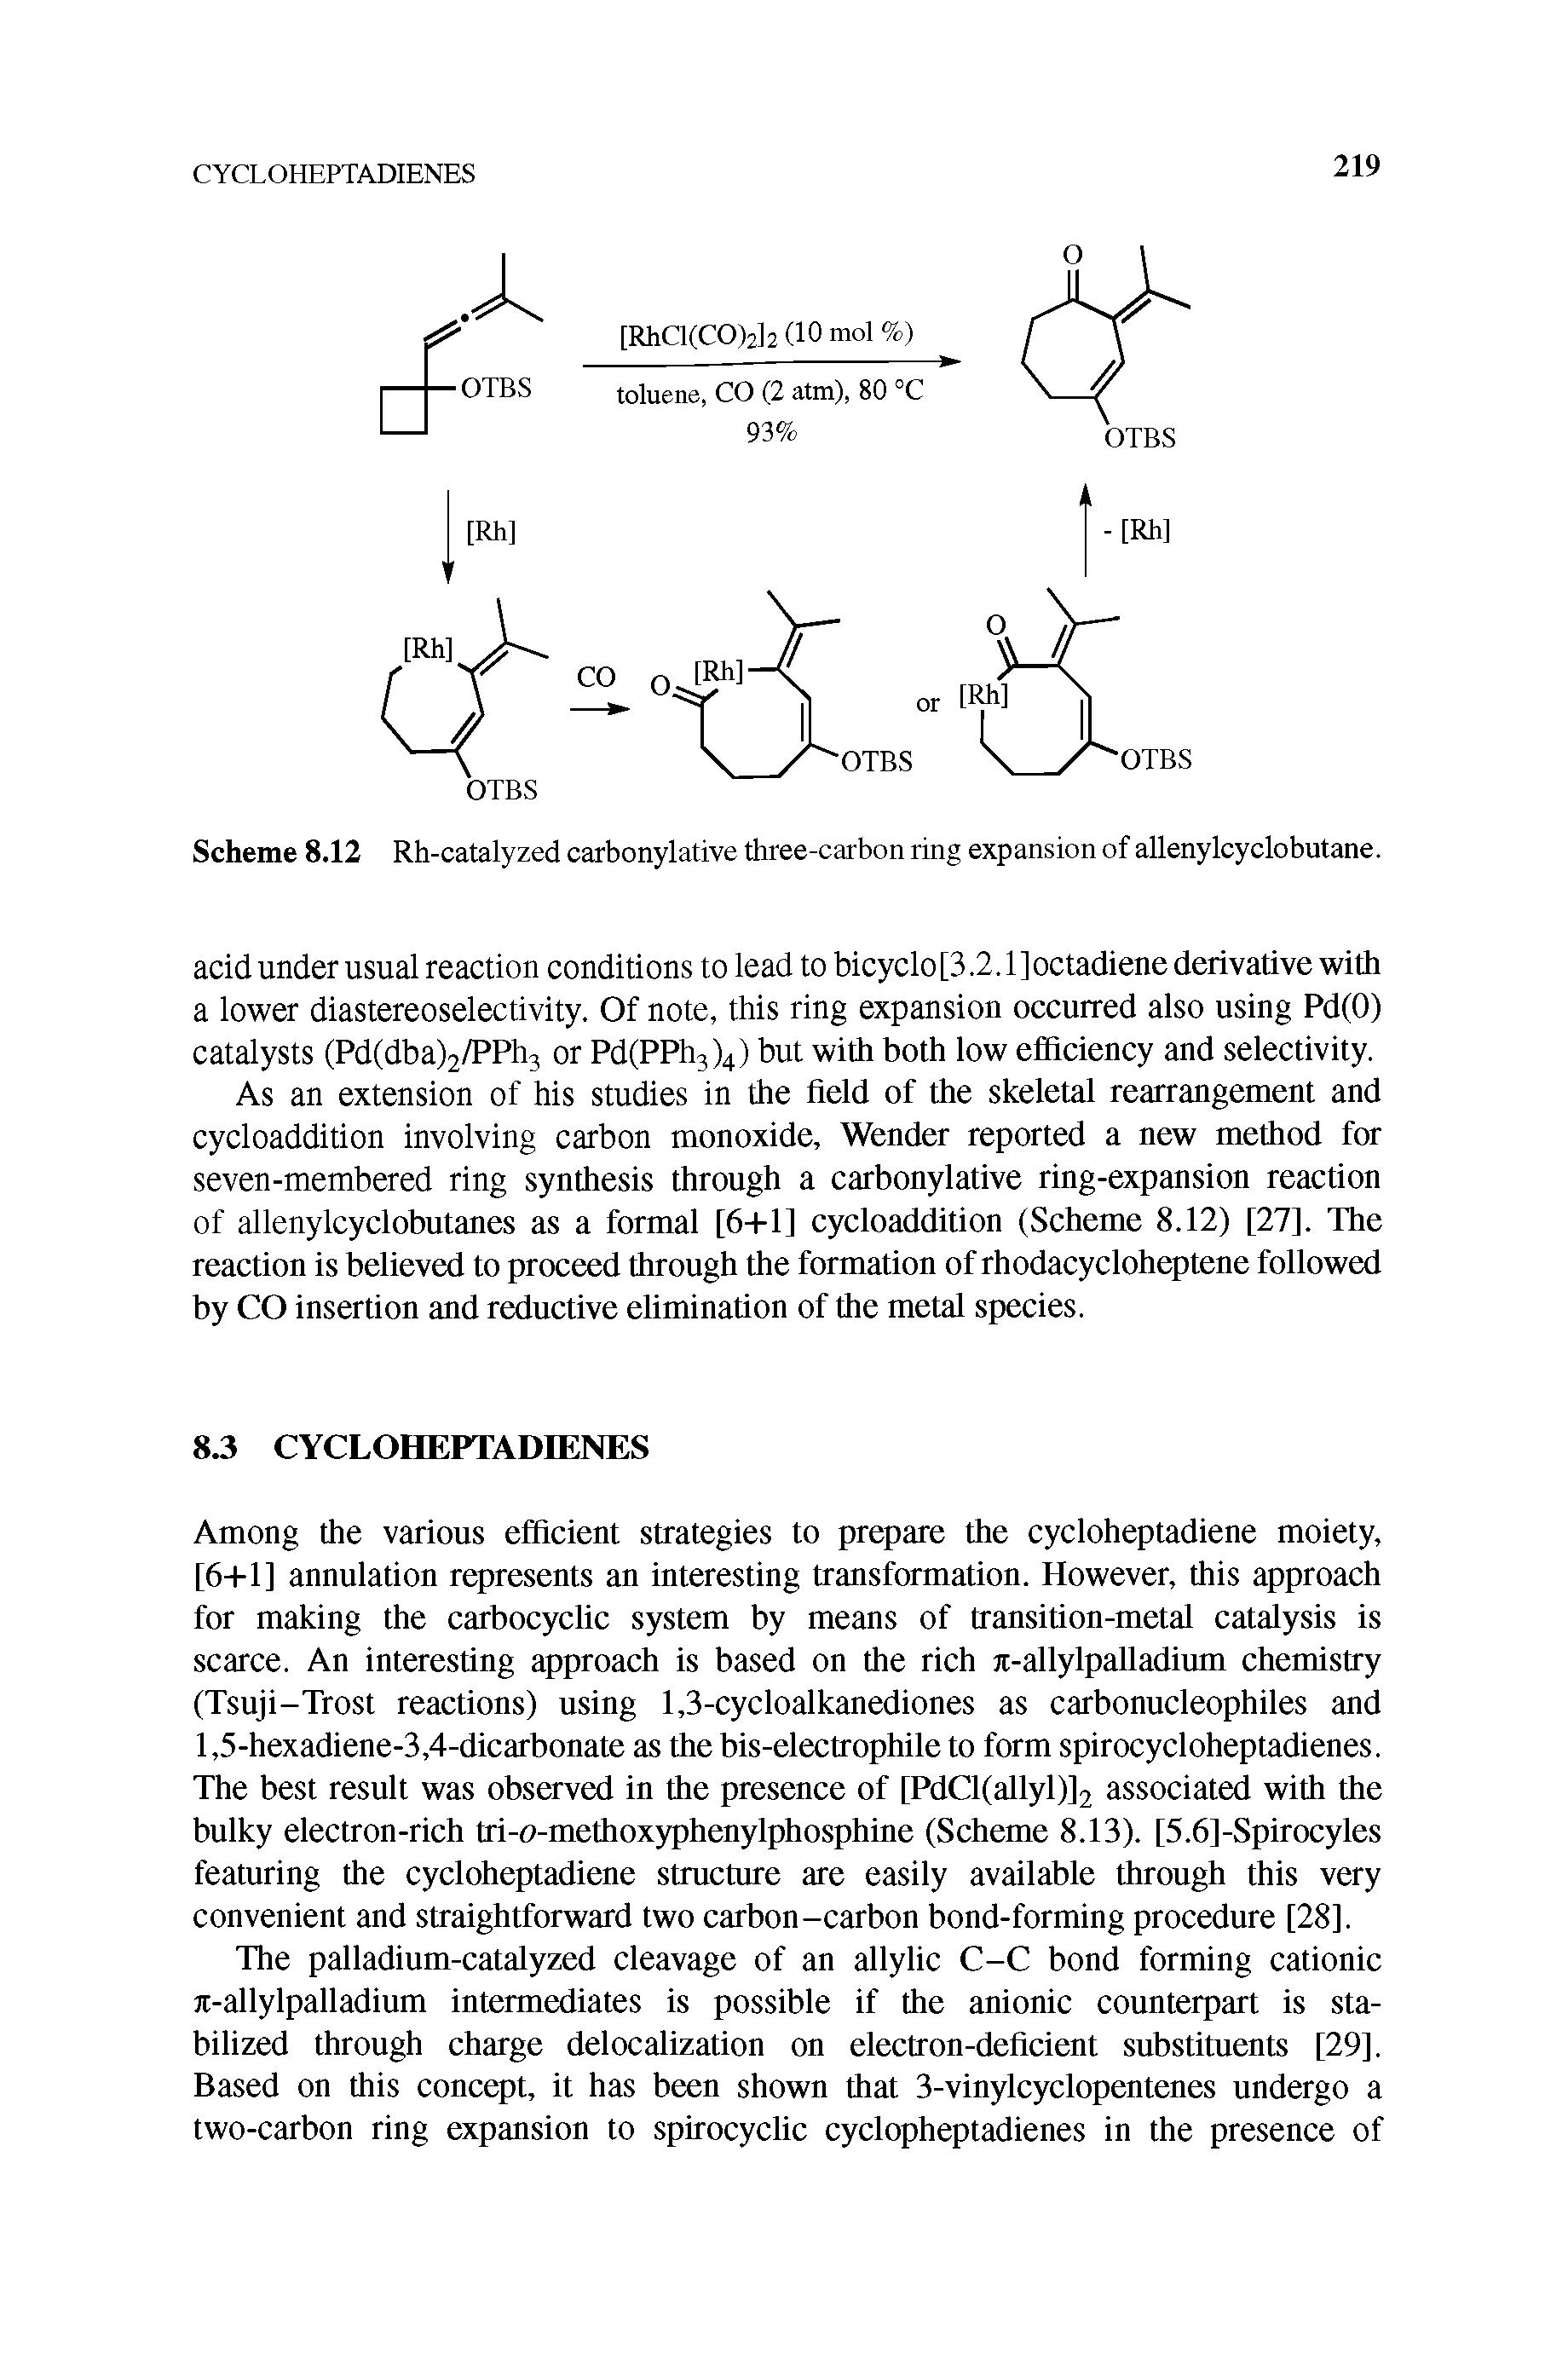 Scheme 8.12 Rh-catalyzed carbonylative three-carbon ring expansion of allenylcyclobutane.